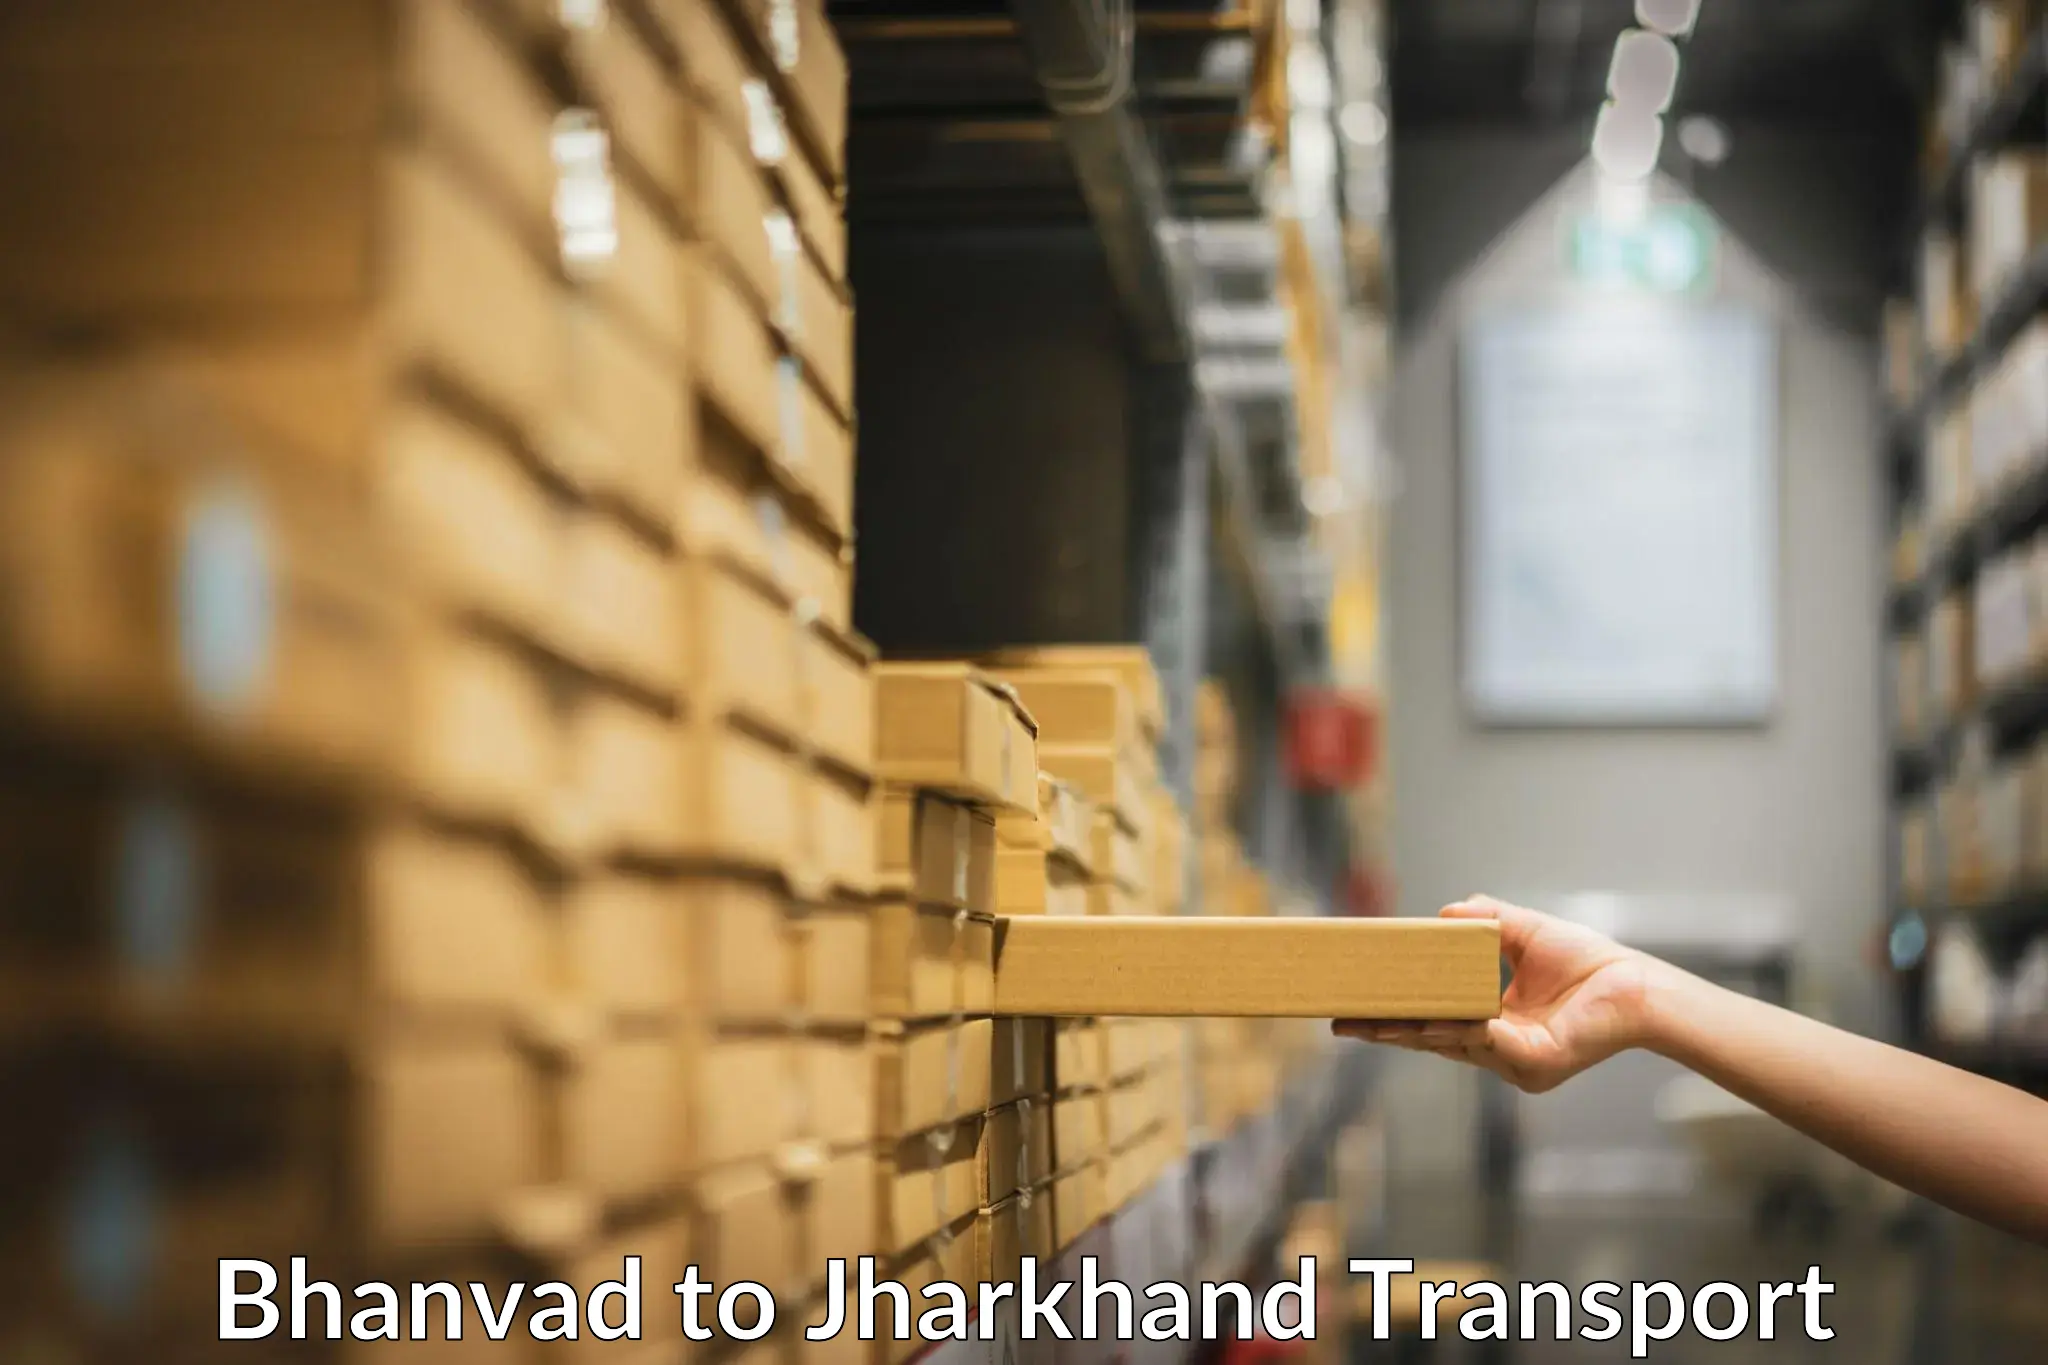 Truck transport companies in India Bhanvad to Nagar Untari